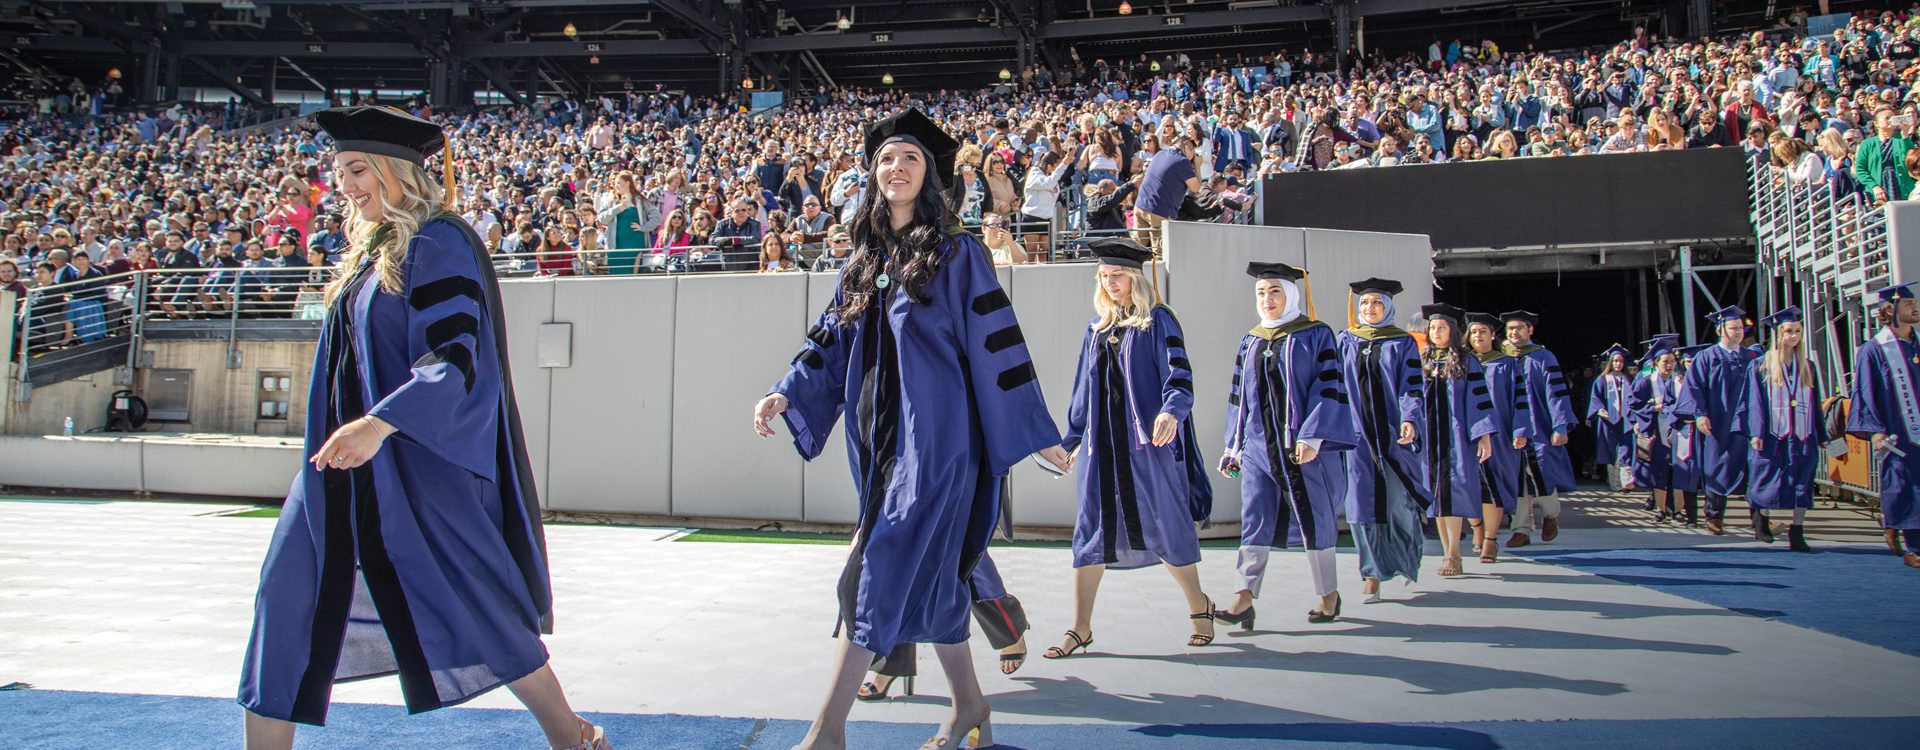 FDU graduates walk onto an athletic field during commencement ceremonies.